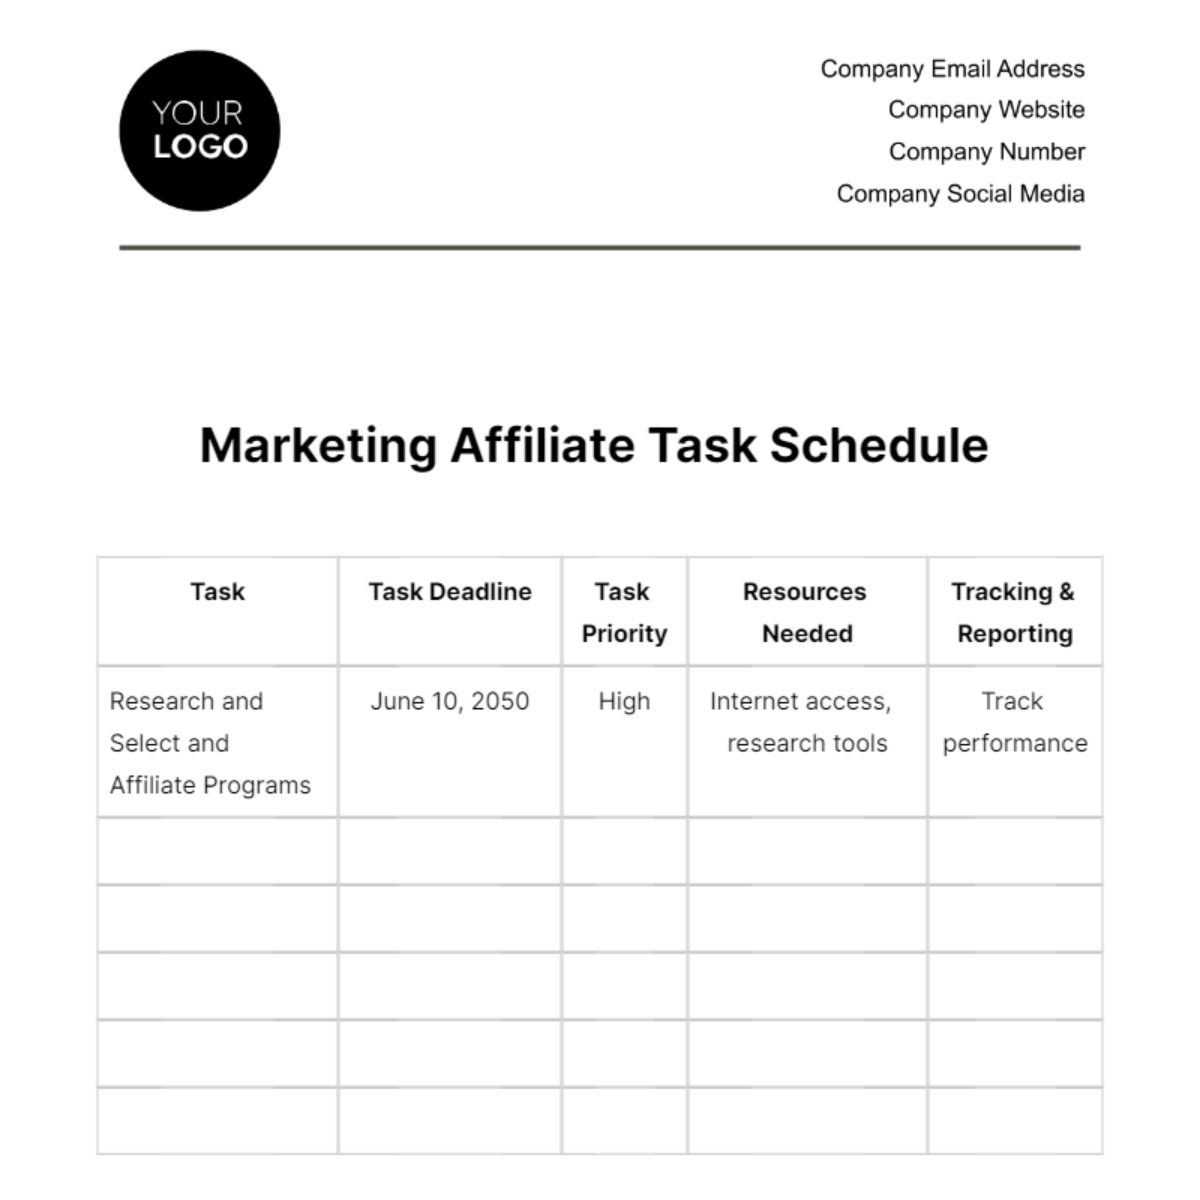 Marketing Affiliate Task Schedule Template